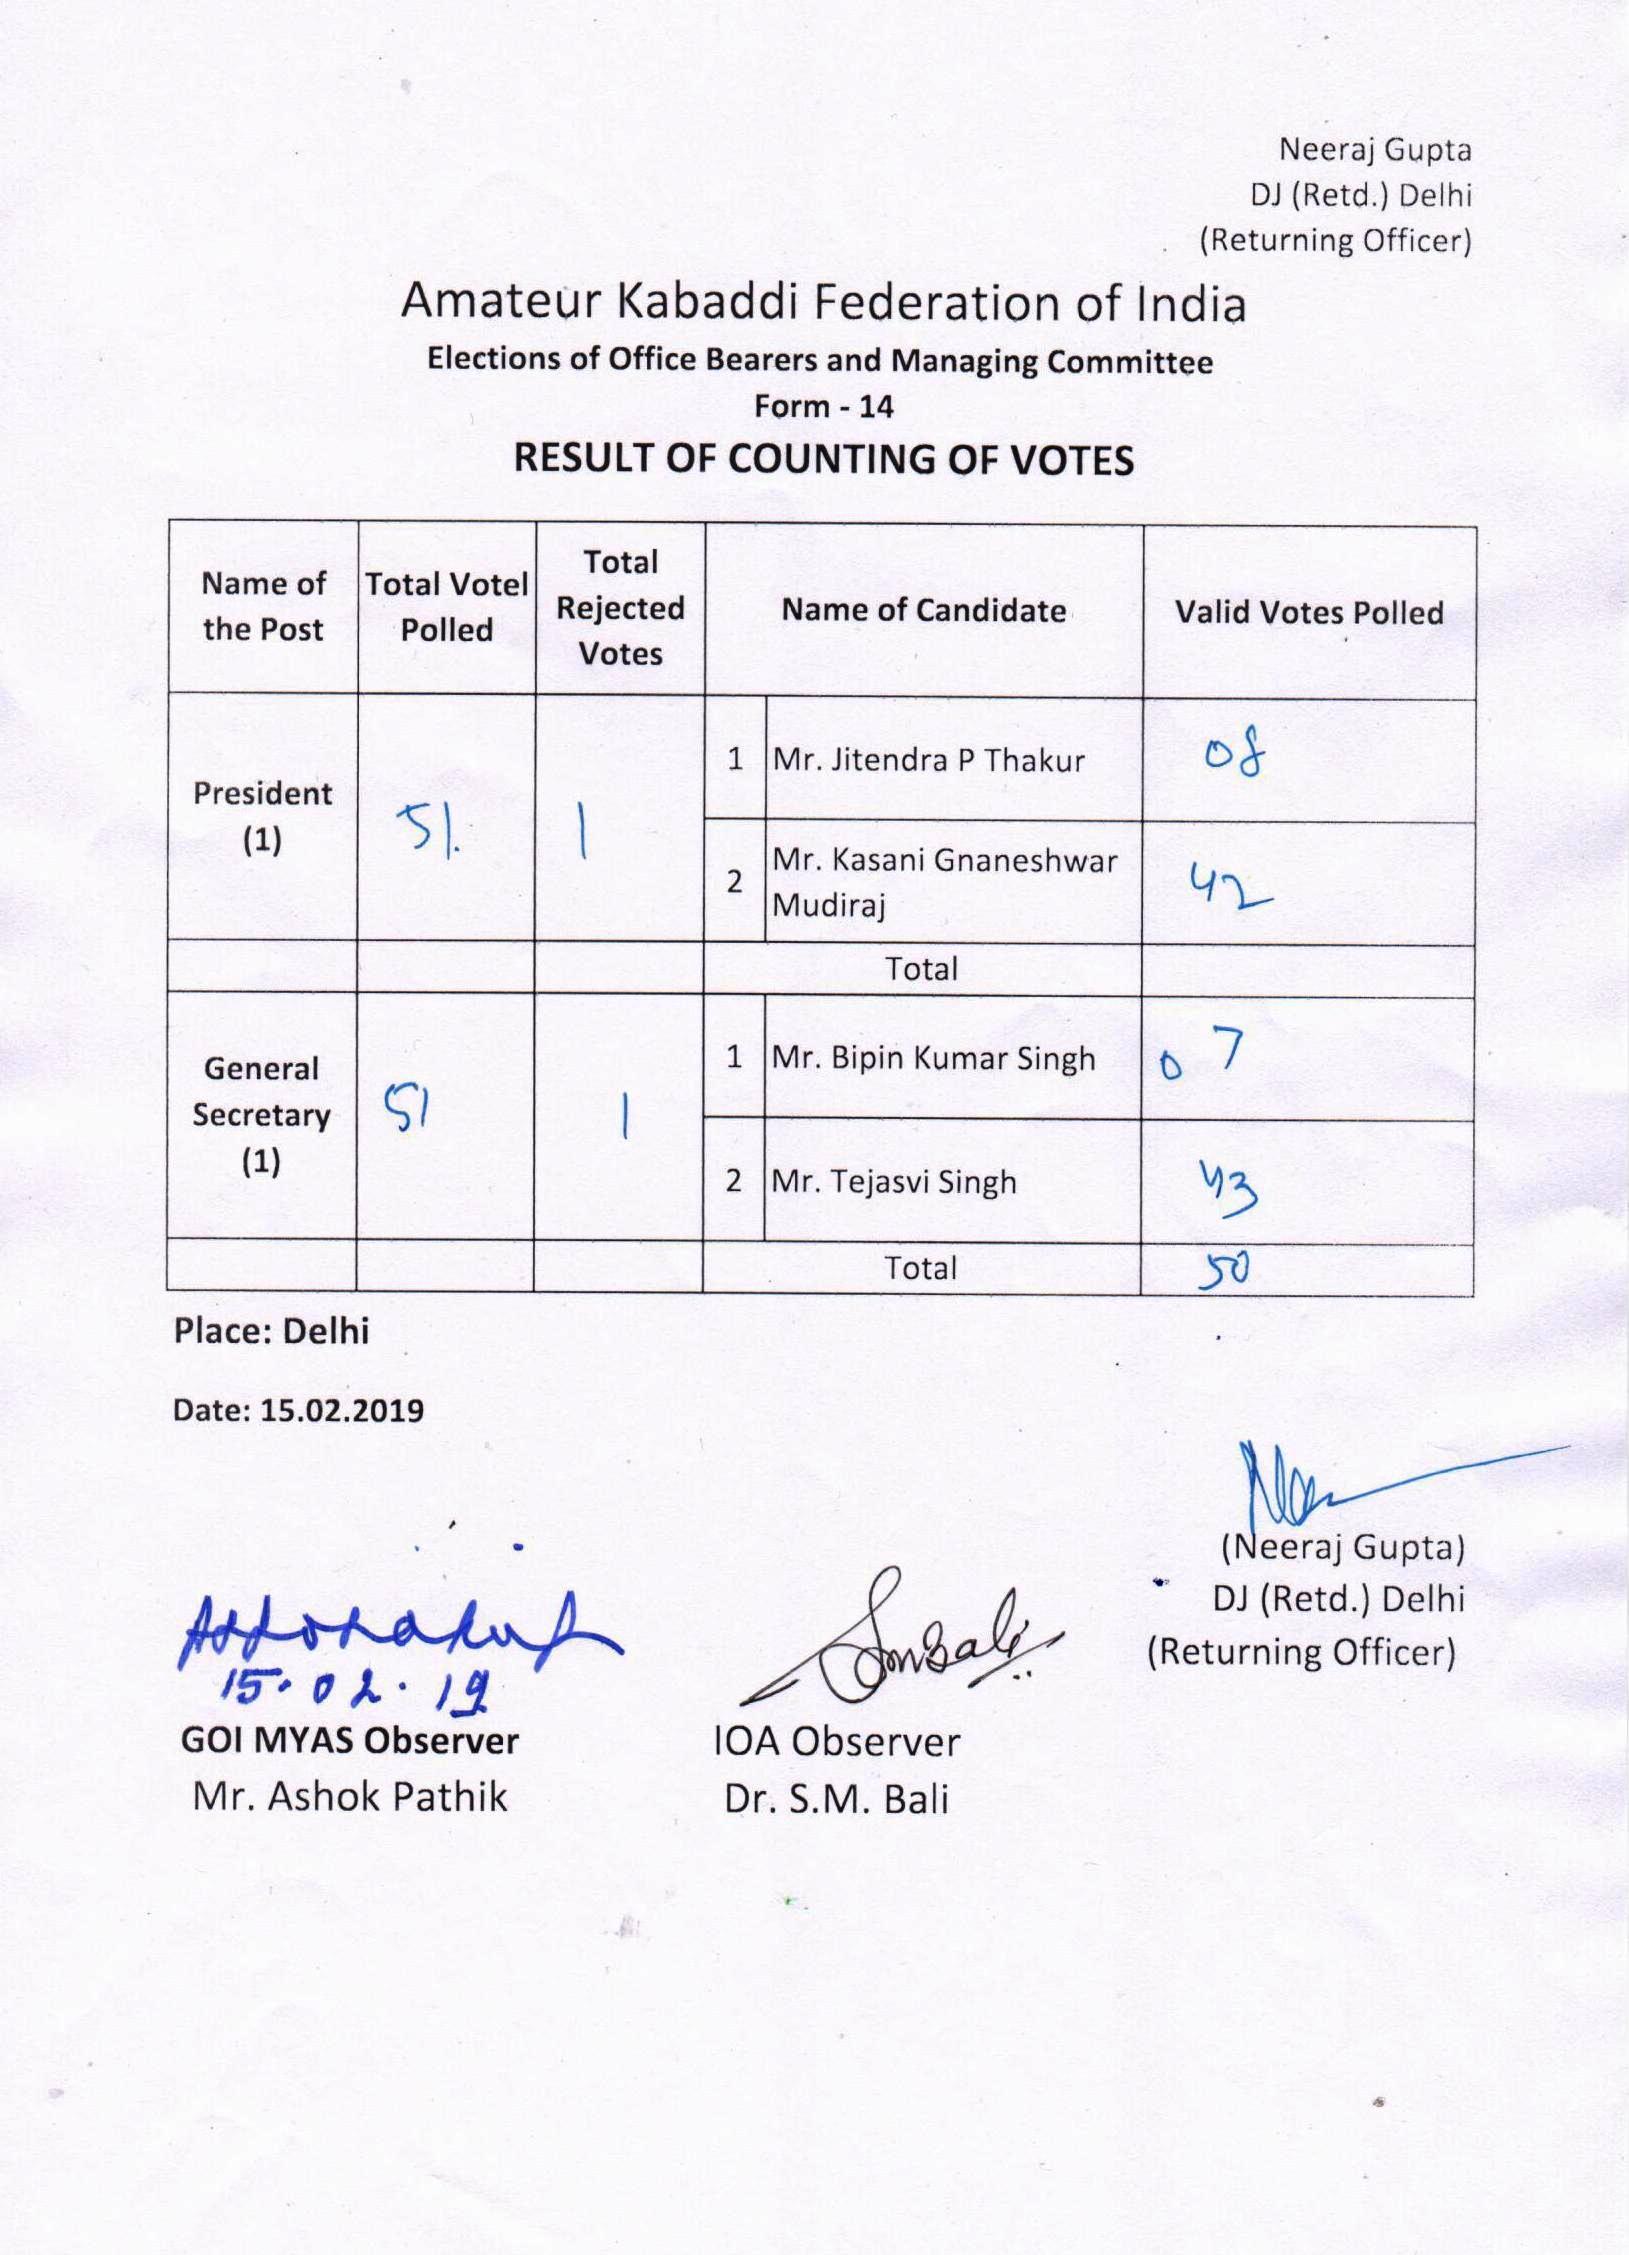 Election 2019 - Amateur Kabaddi Federation of India (AKFI)1629 x 2255